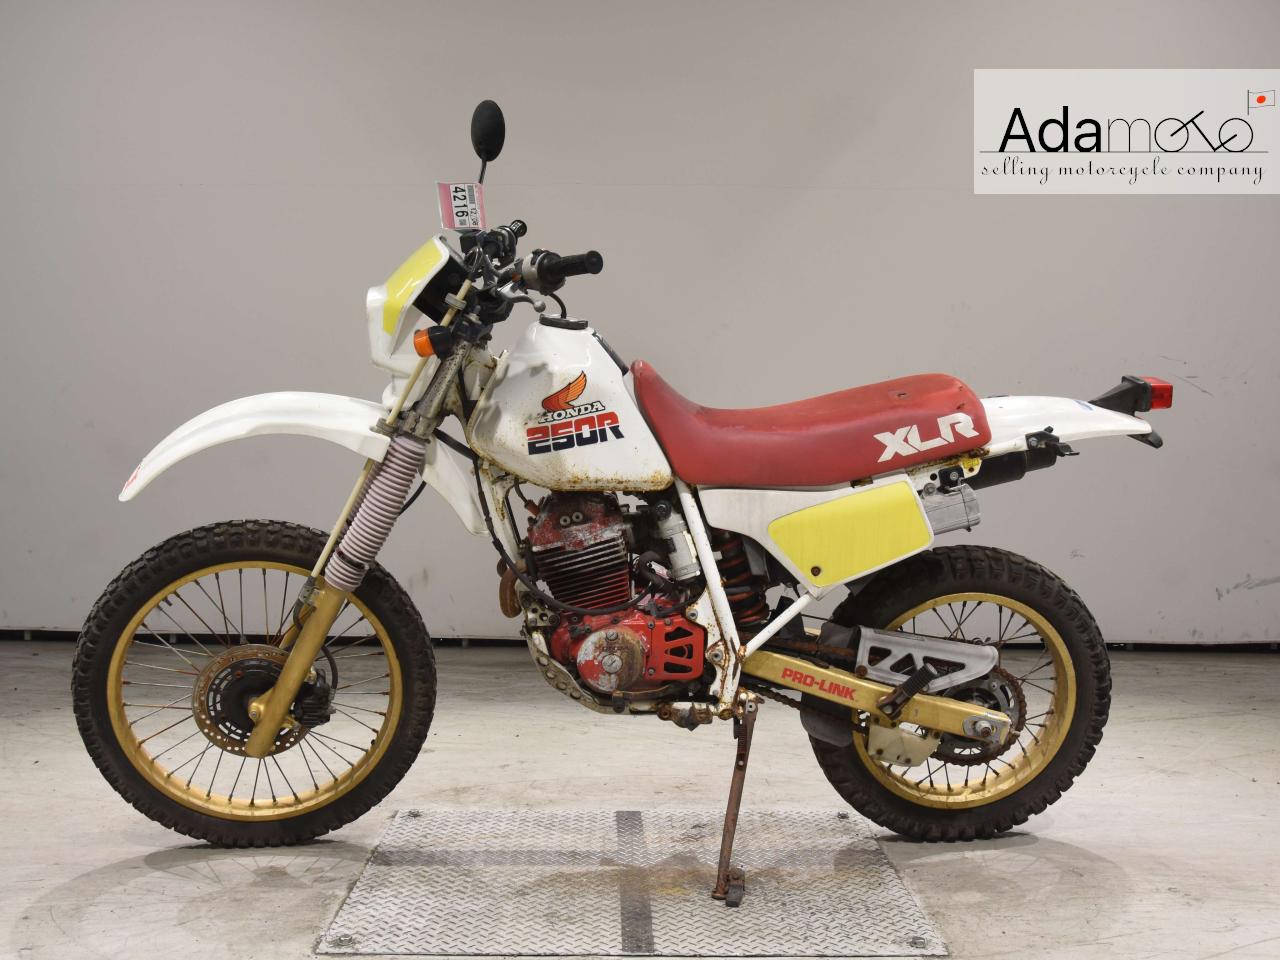 Honda XLR250R 1 - Adamoto - Motorcycles from Japan